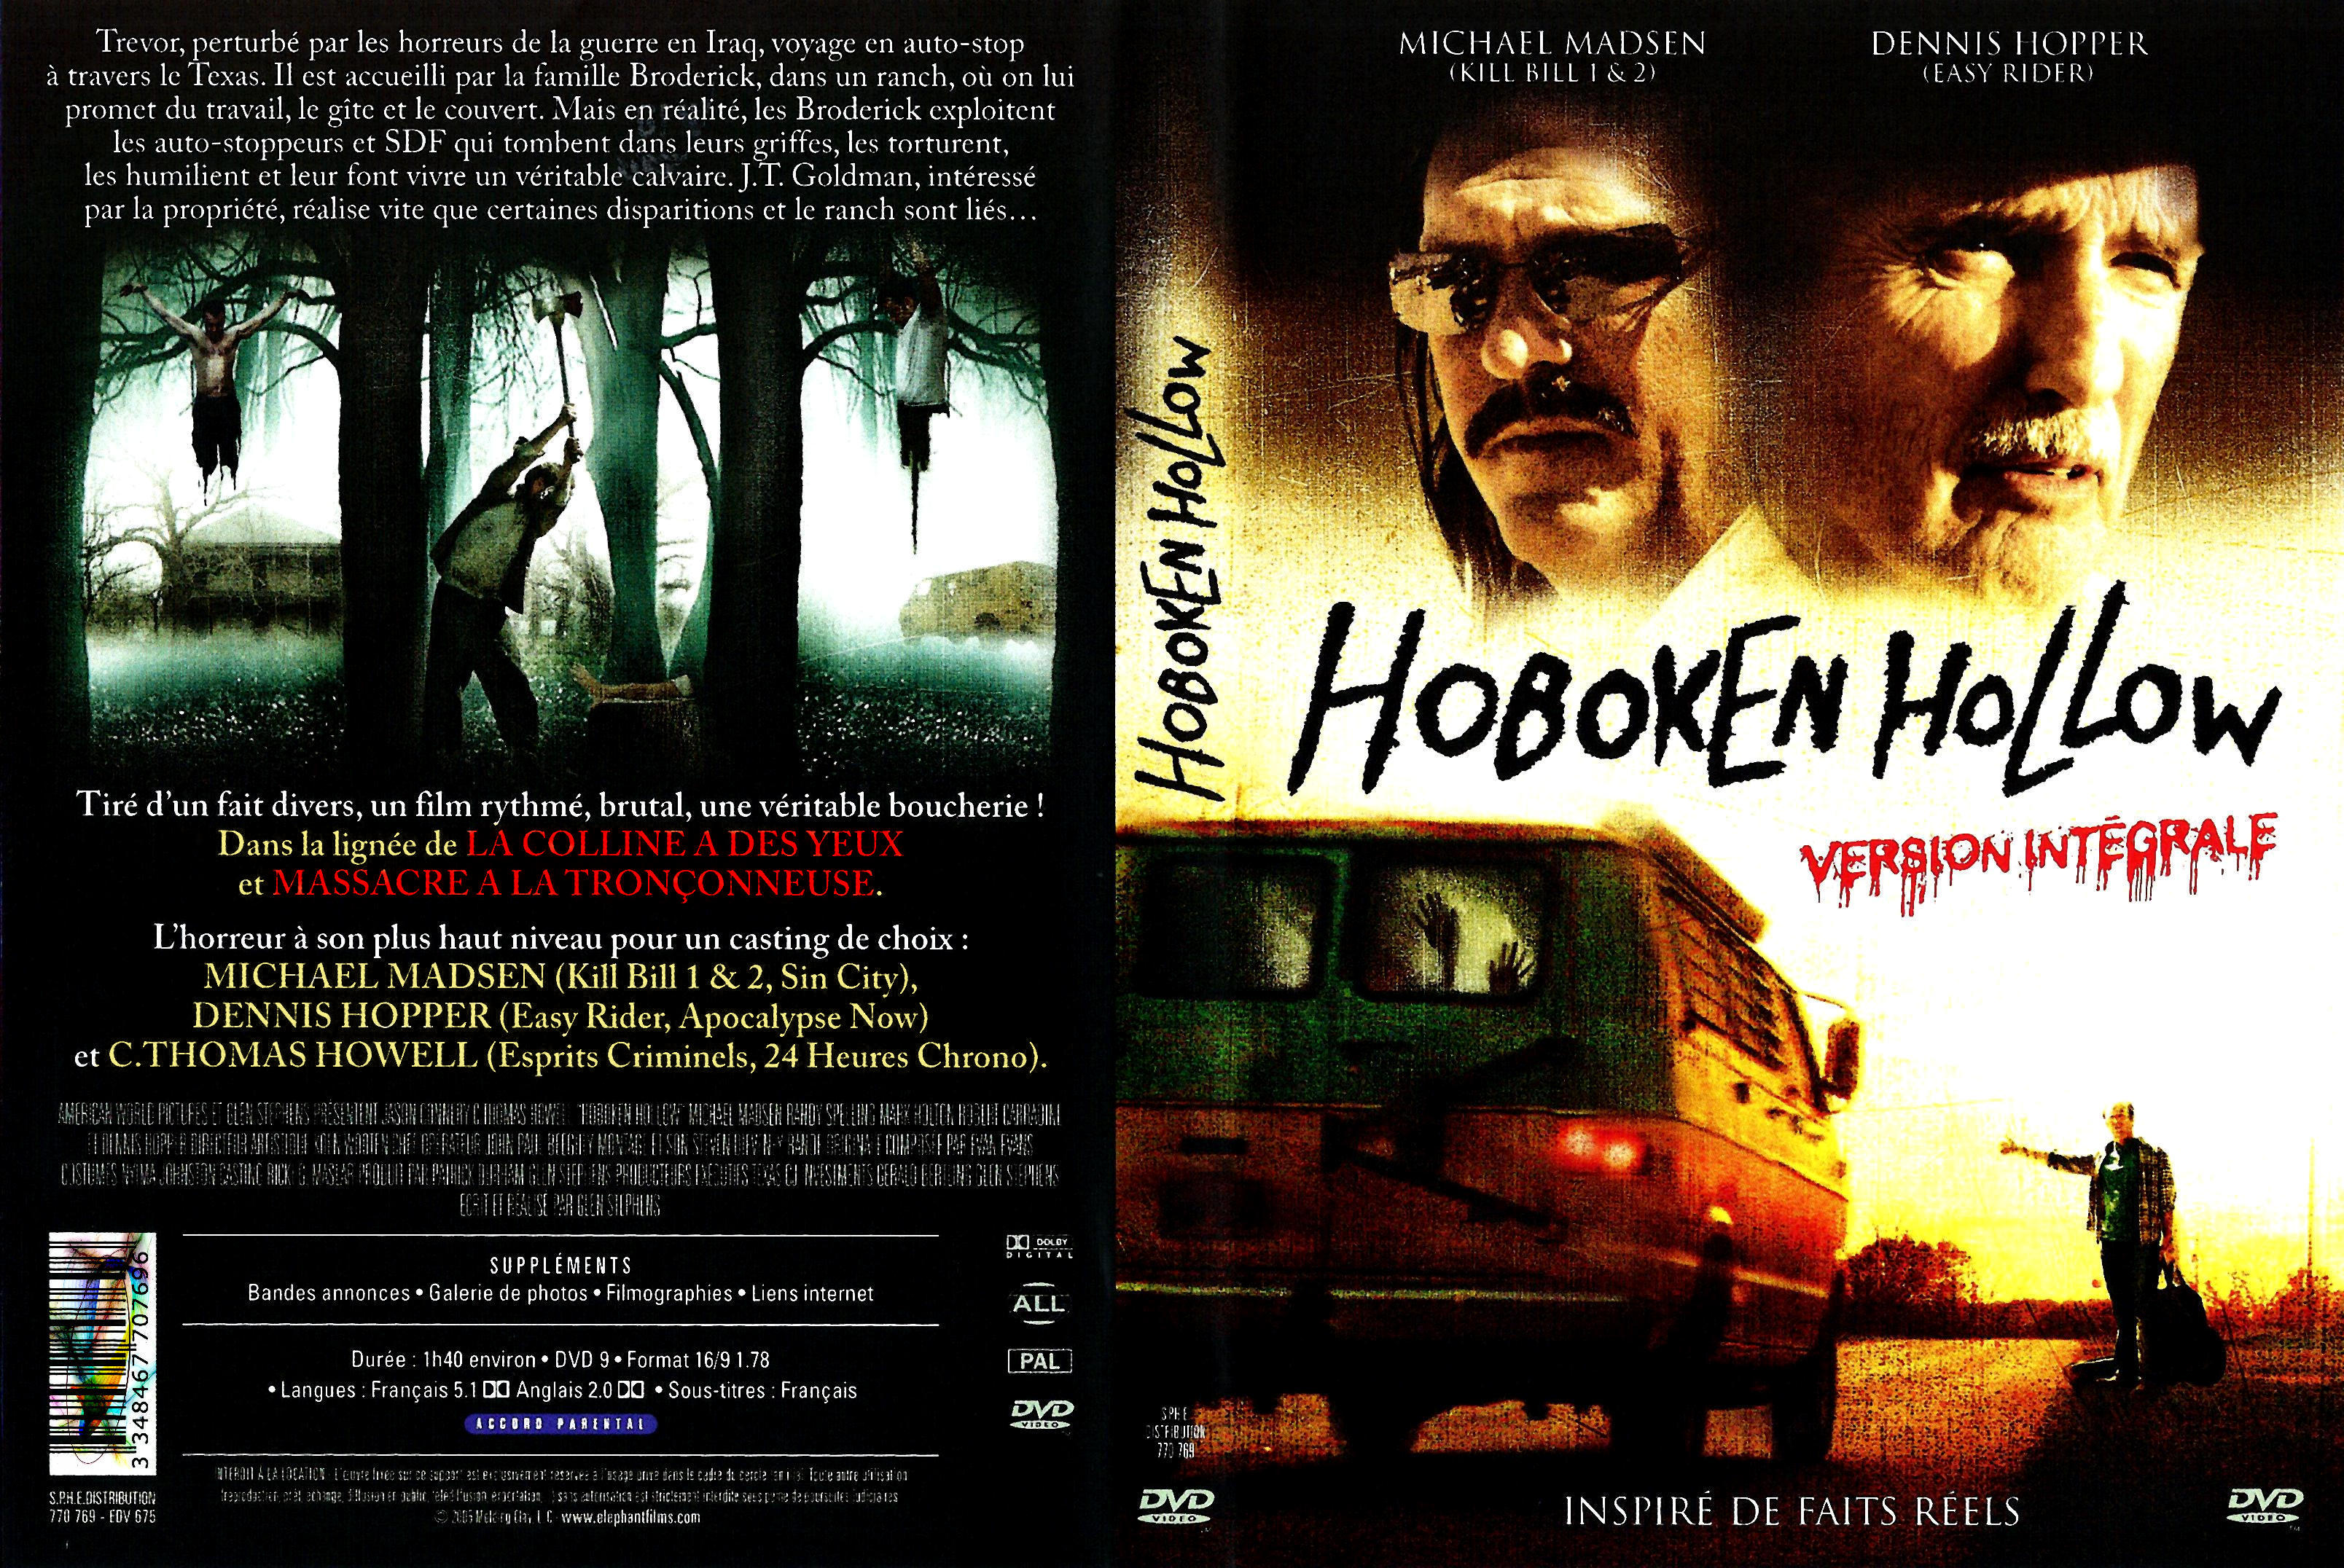 Jaquette DVD Hoboken hollow v2